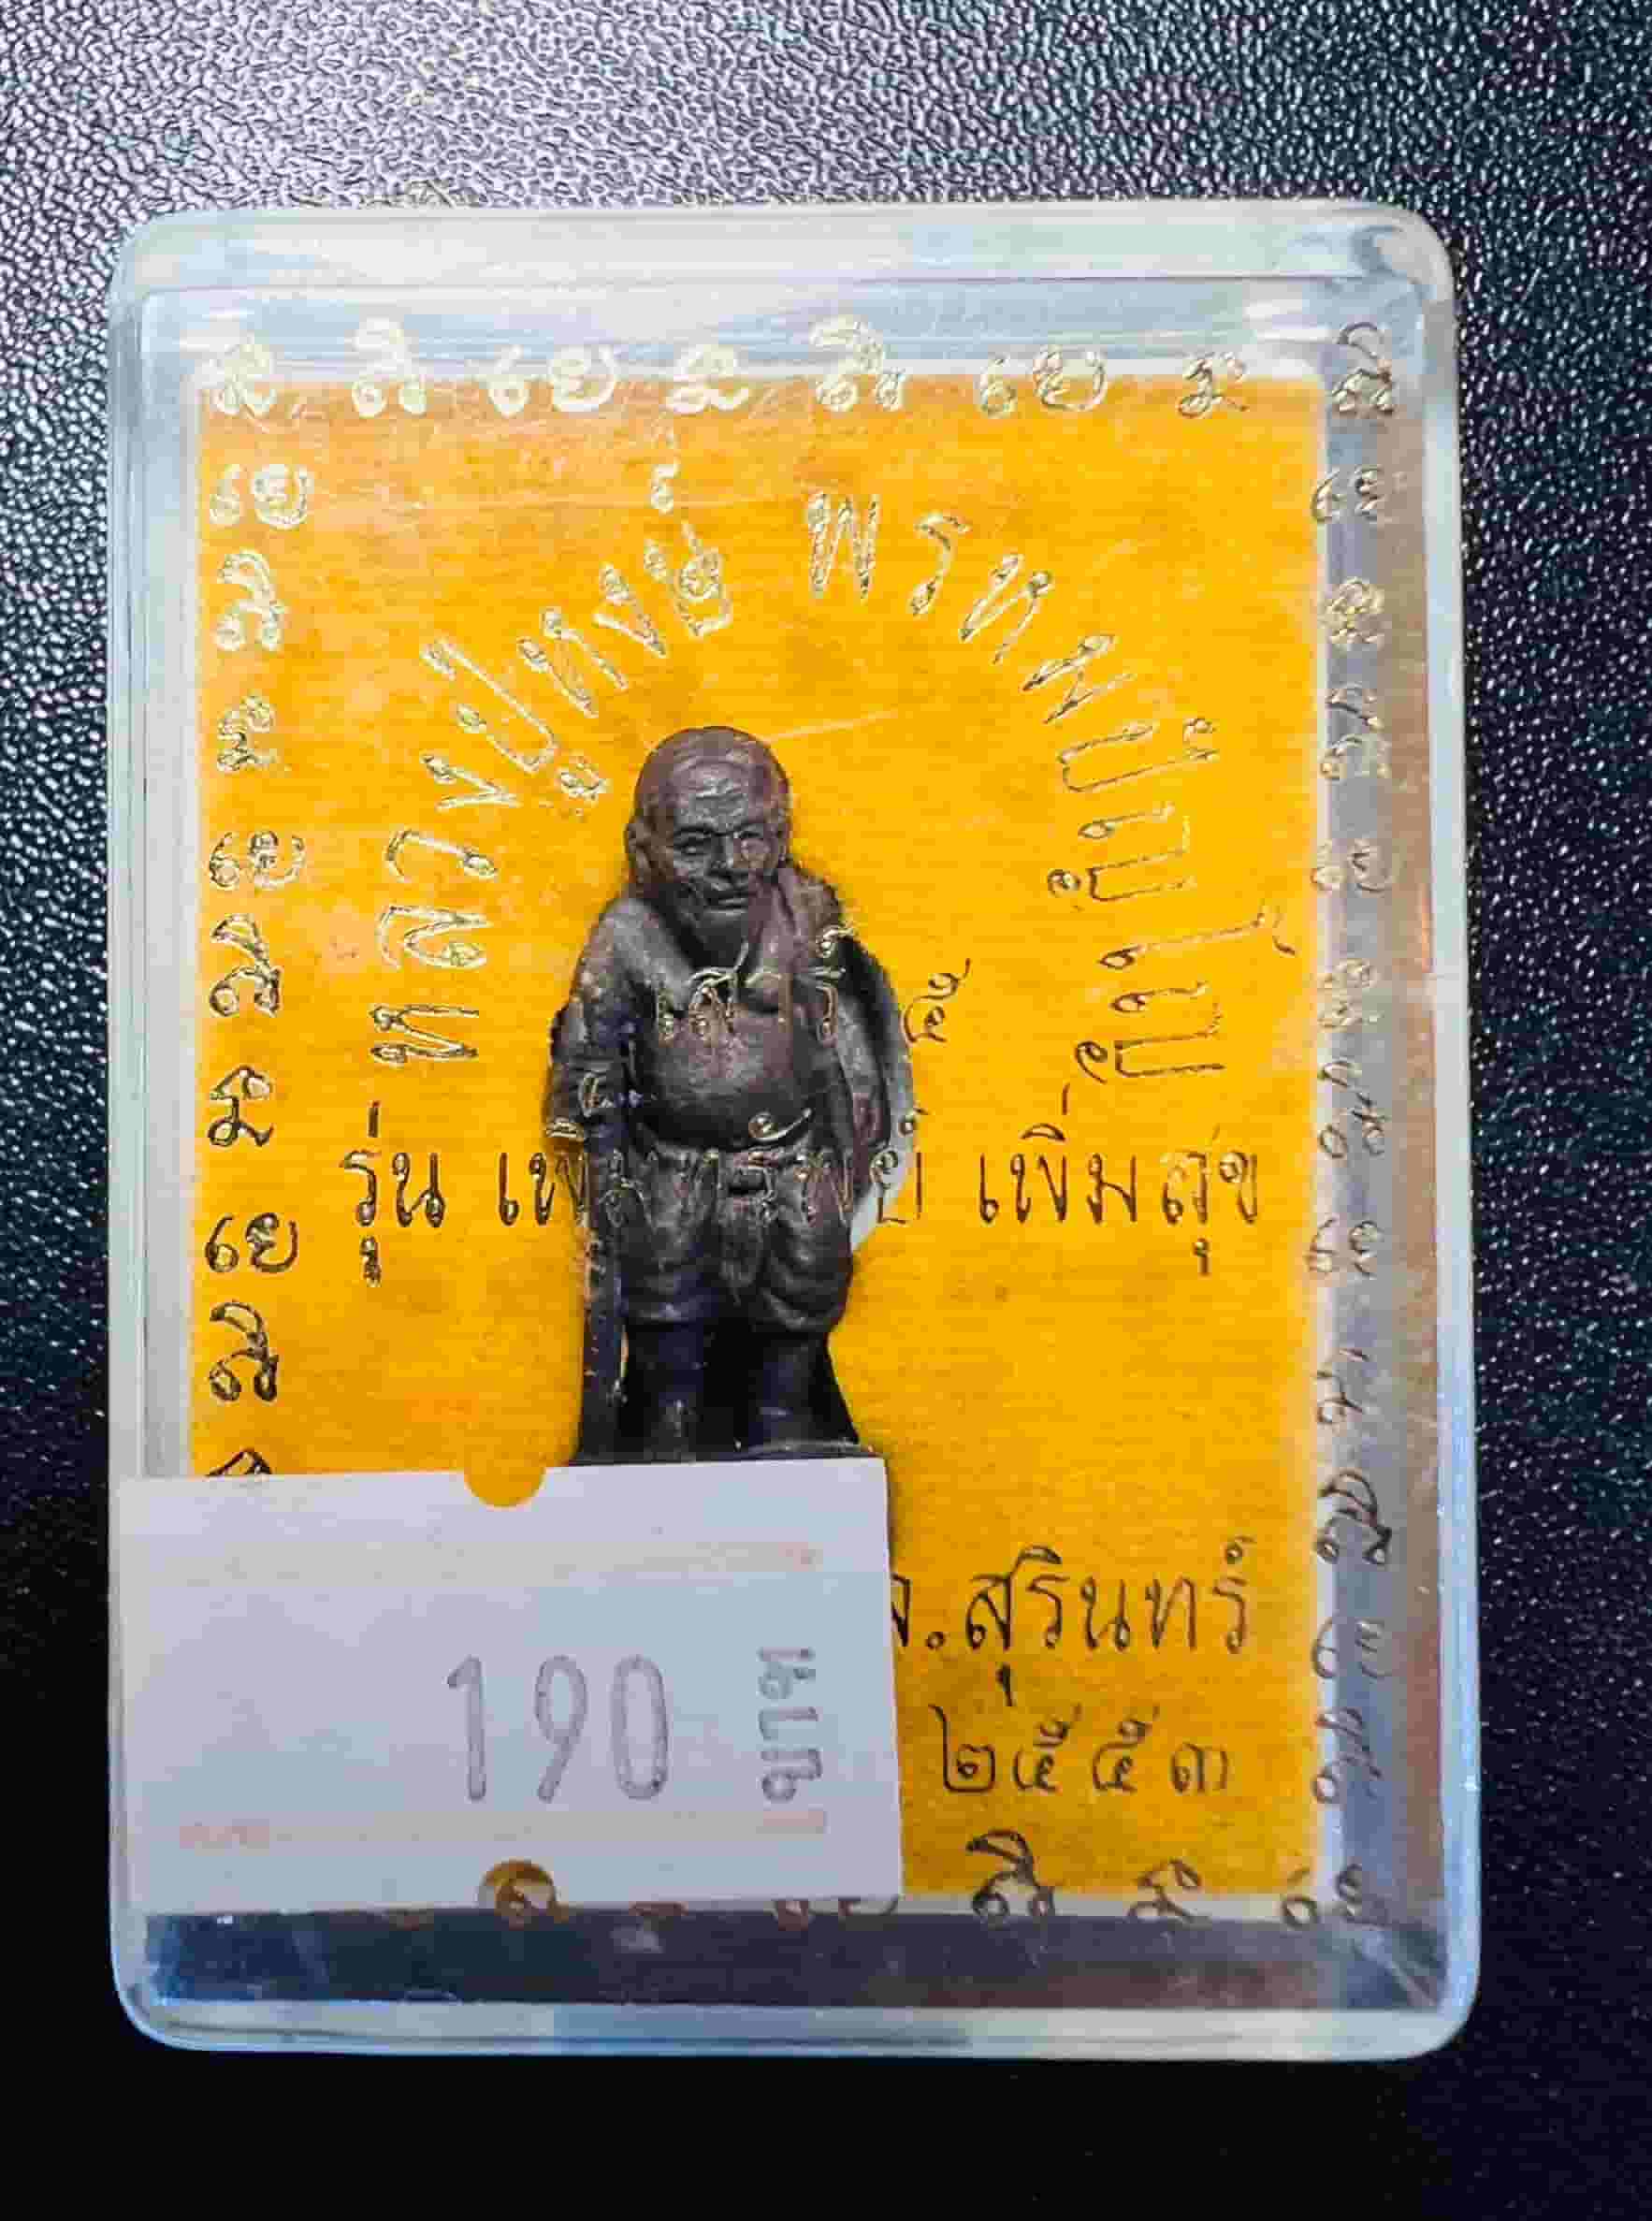 Chuchok (Version: Perm Sub Perm Suk) by LP’Hong Wat Phetburi, Surin Province. - คลิกที่นี่เพื่อดูรูปภาพใหญ่